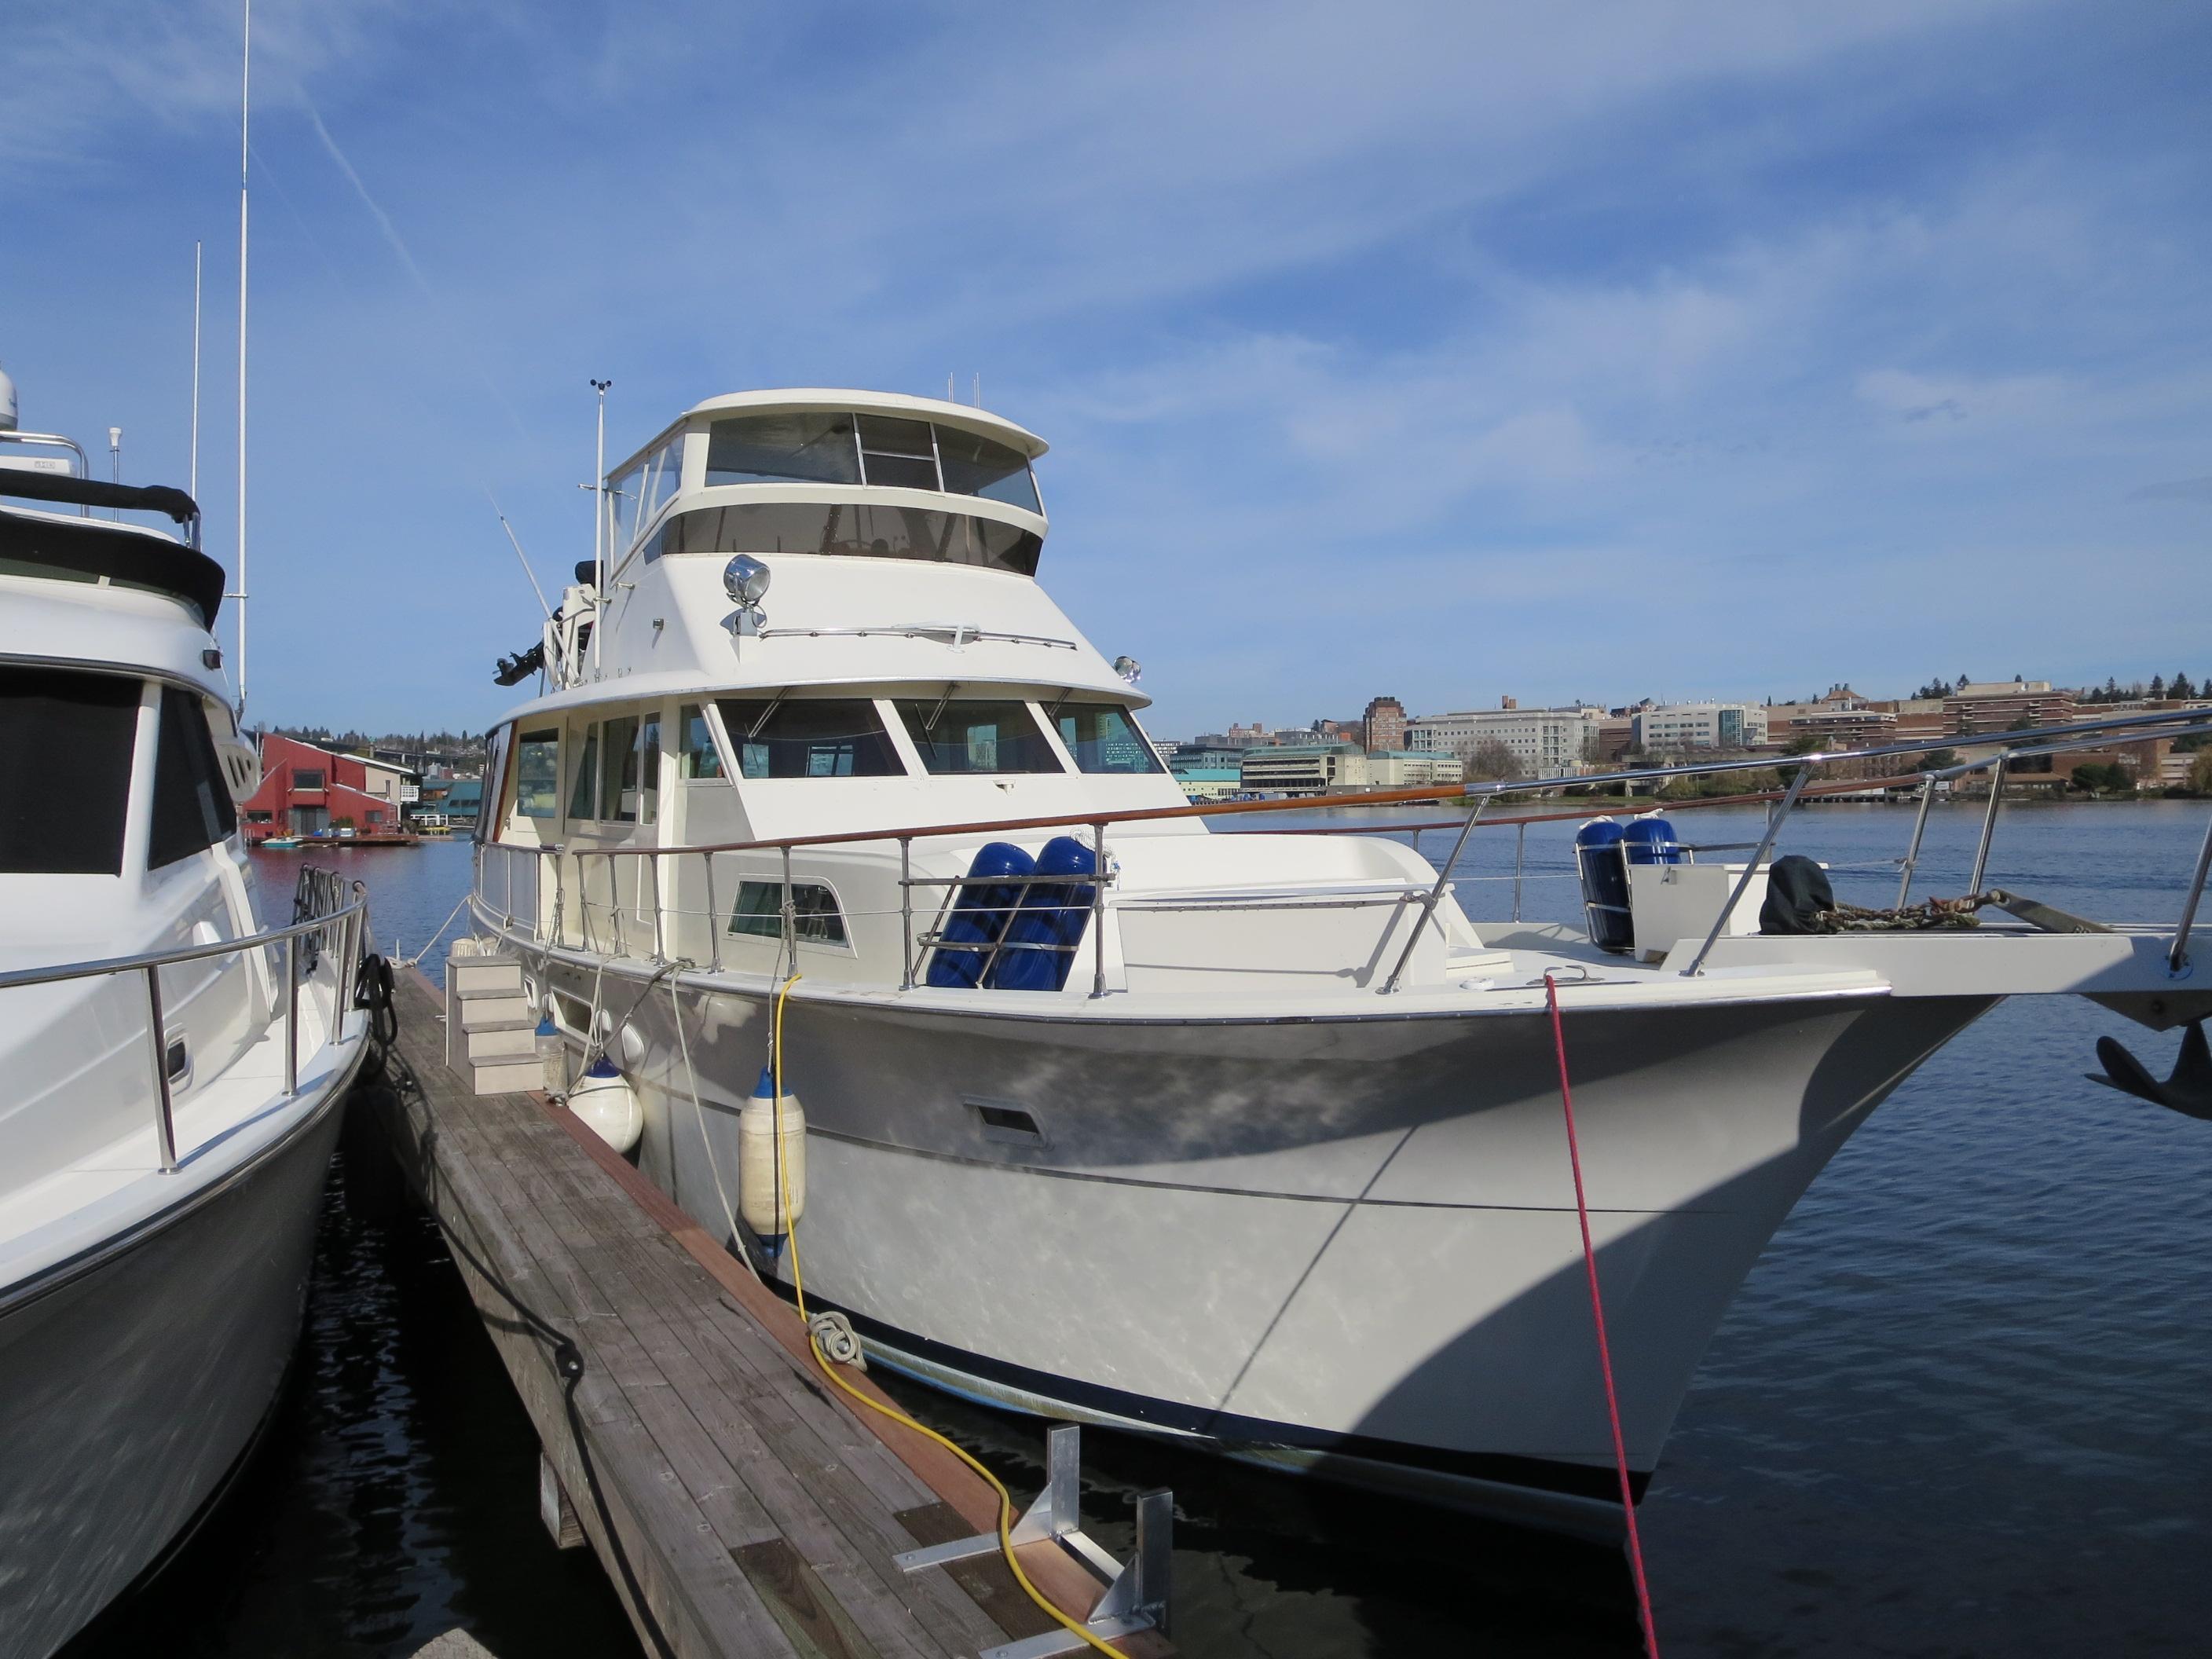 Hatteras Motoryacht, Seattle